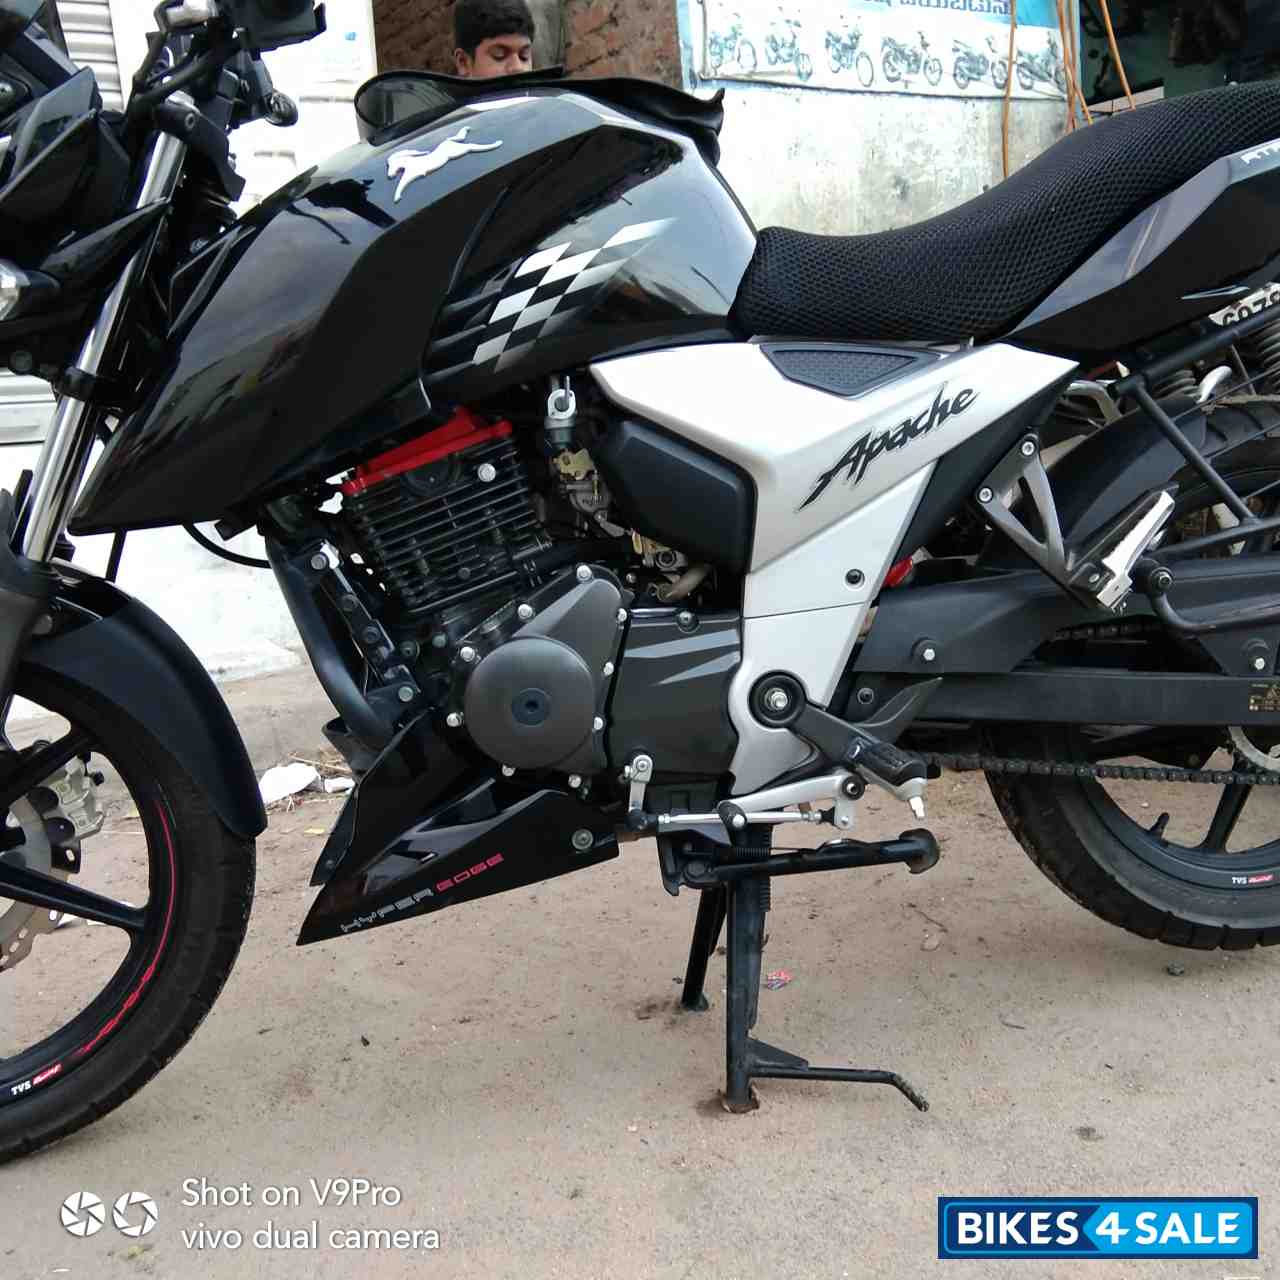 Used 2018 Model Tvs Apache Rtr 160 4v For Sale In Anantapur Id 246920 Black White Colour Bikes4sale